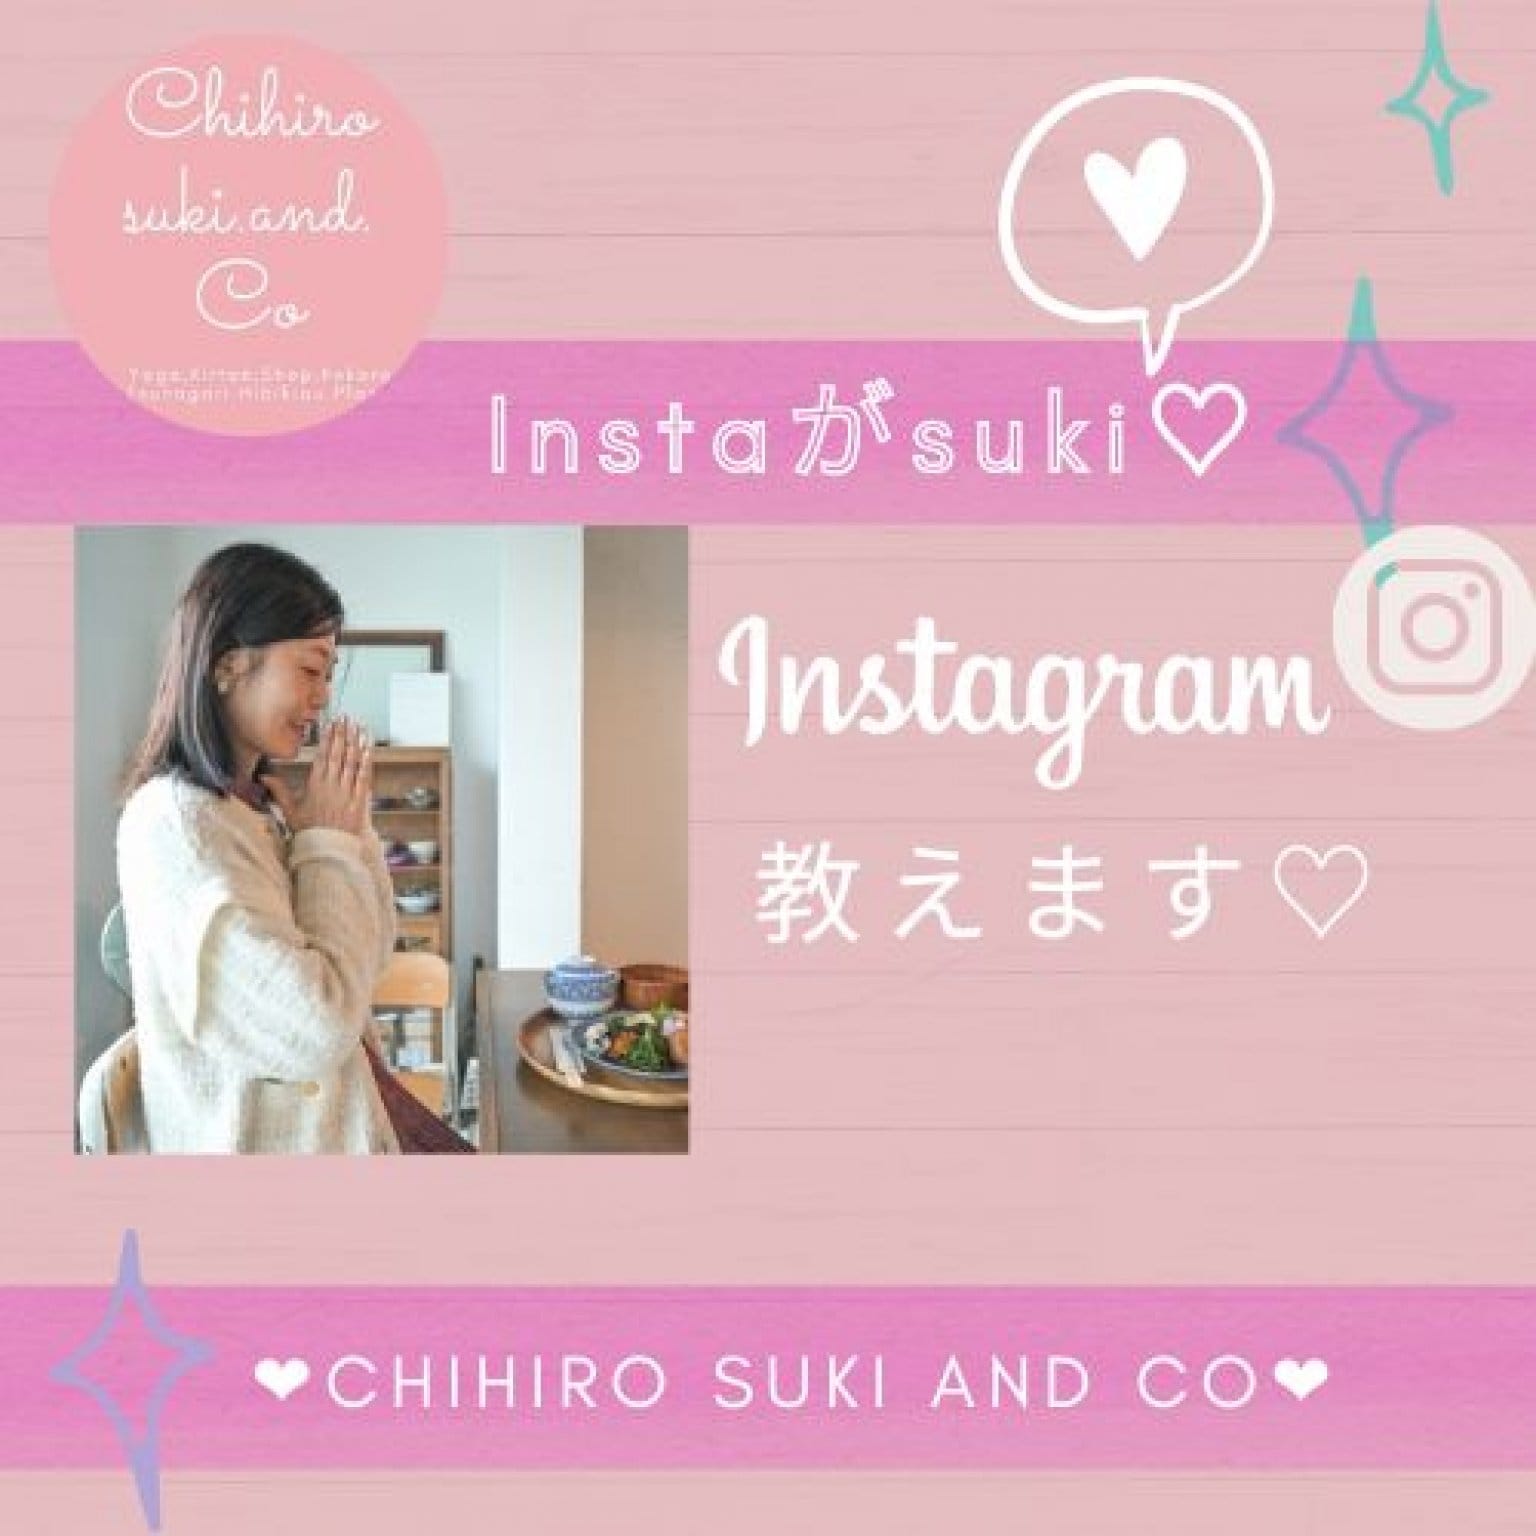 Chihiro suki and Co   30min　\SNS Instagram レクチャ/